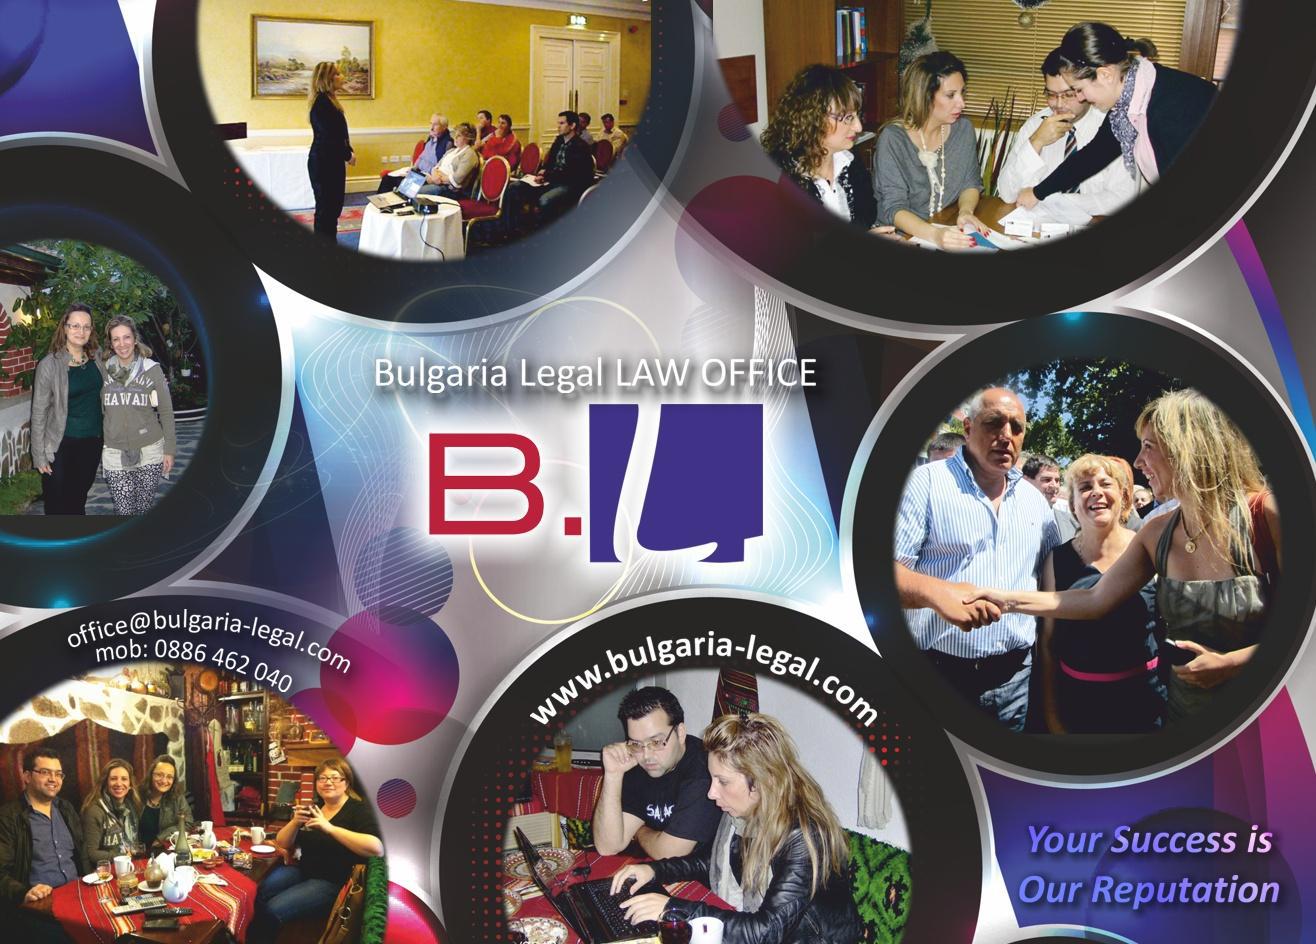 GS Georgieva and Partners - Law office BULGARIA LEGAL LTD